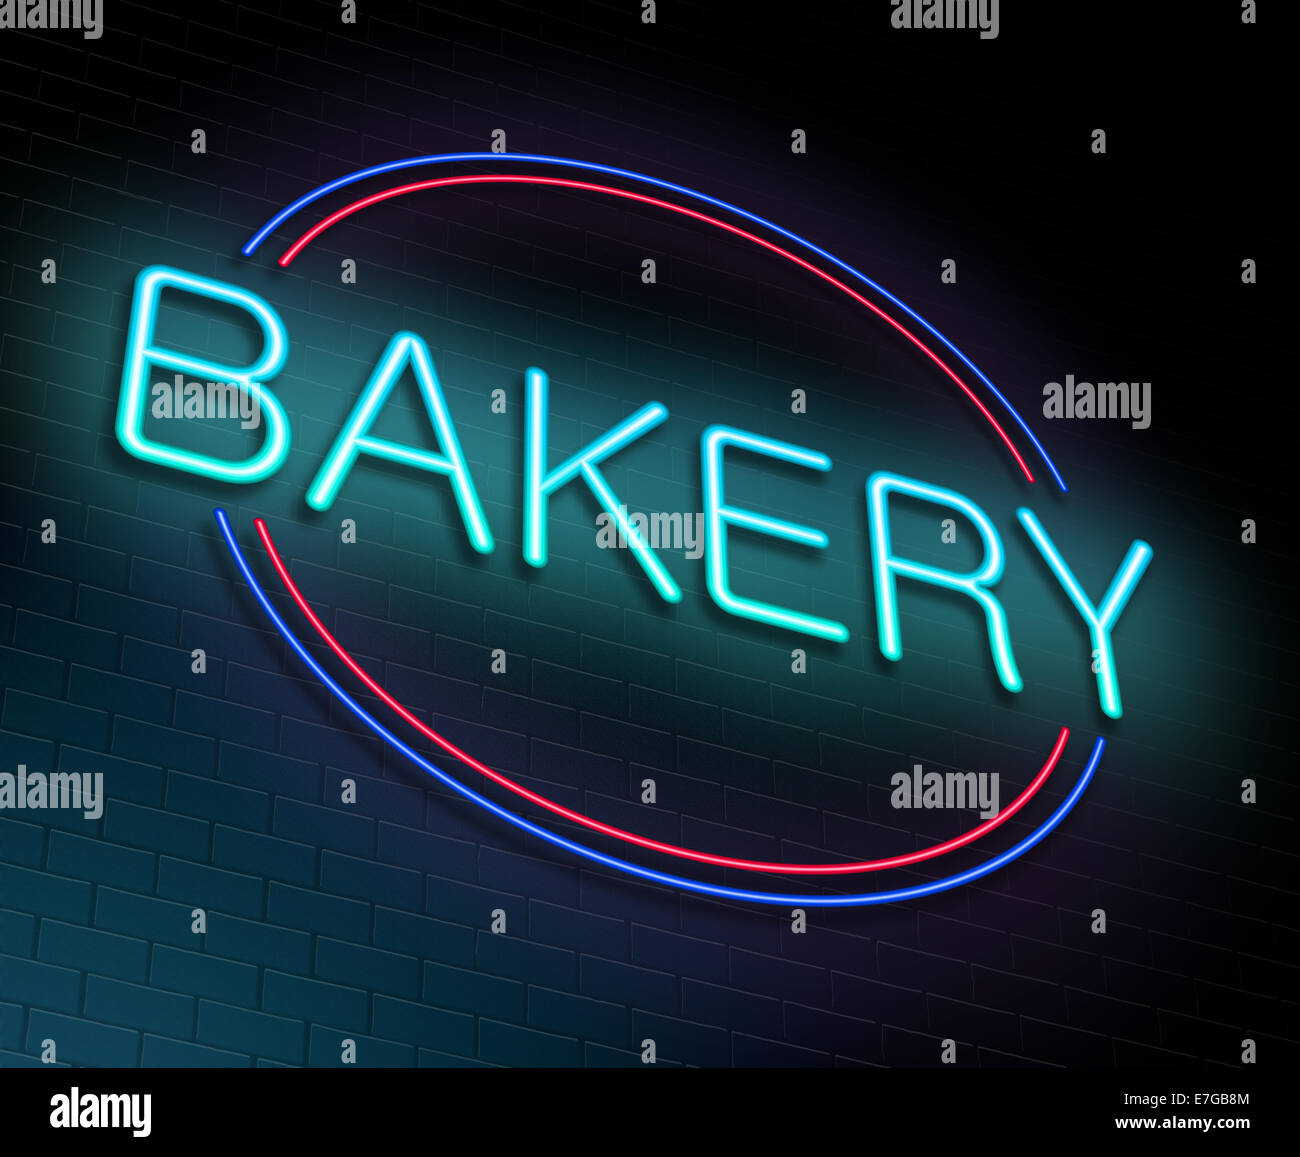 Bakery concept. Stock Photo